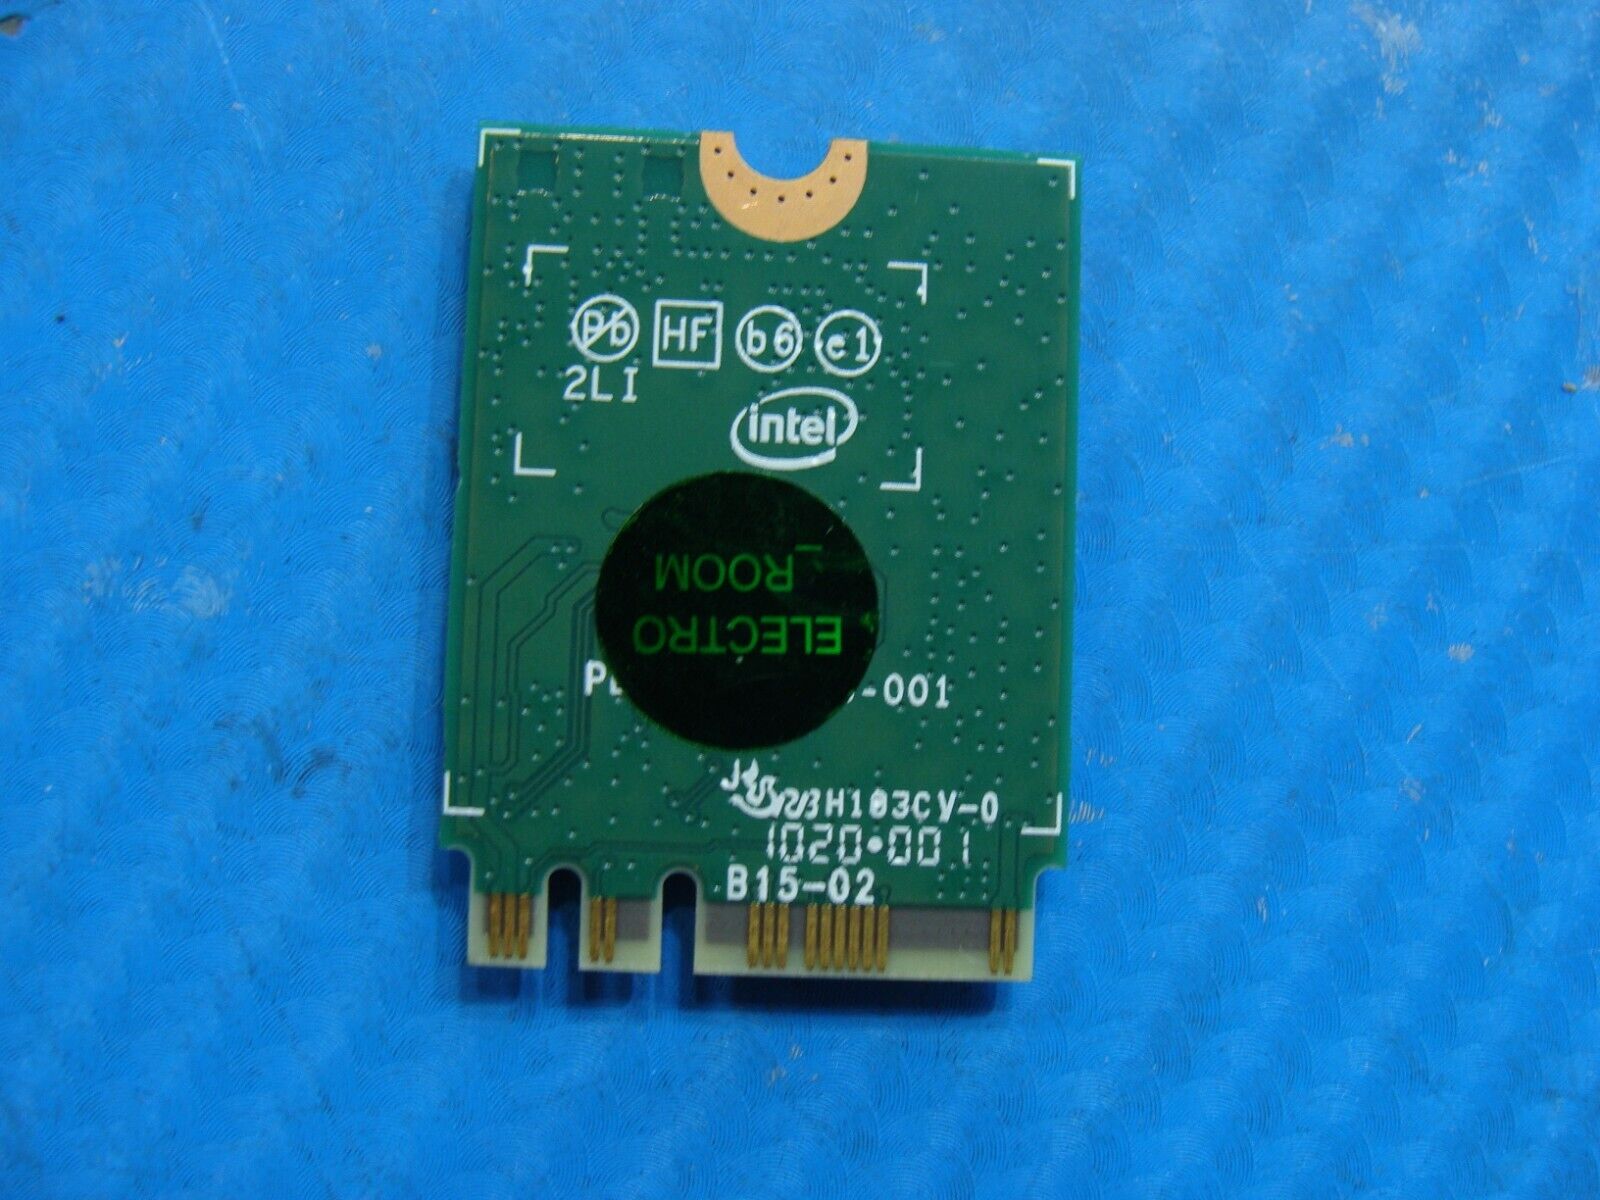 Lenovo Thinkpad E15 Gen 2 15.6 Genuine Wireless WiFi Card AX200NGW 02HK704